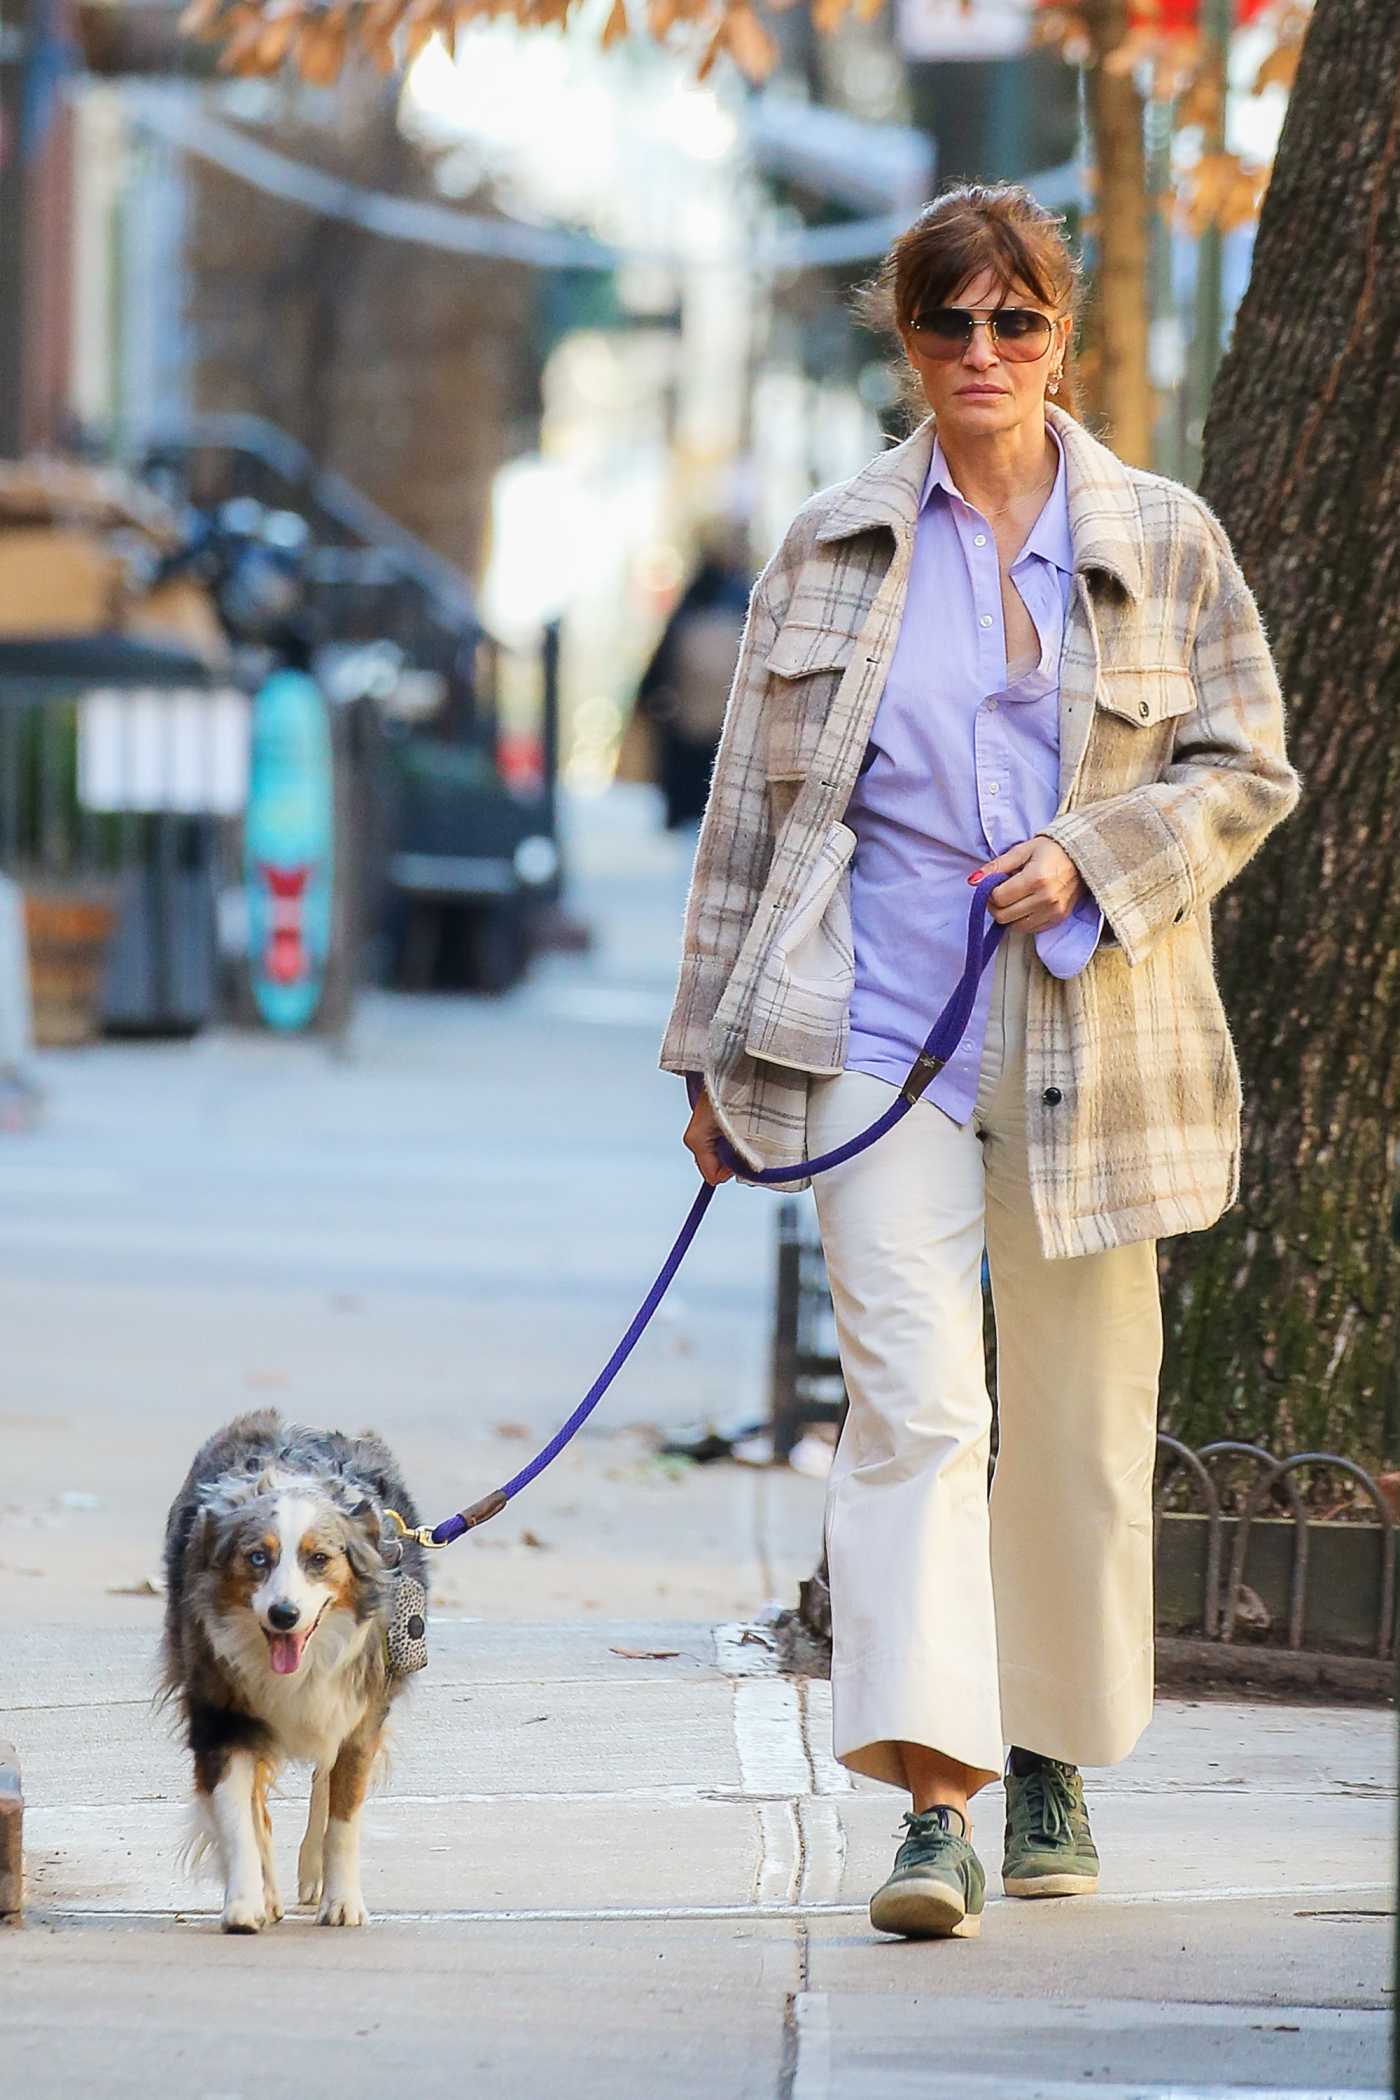 Helena Christensen in a Plaid Shirt Walks Her Dog in New York 02/11/2022